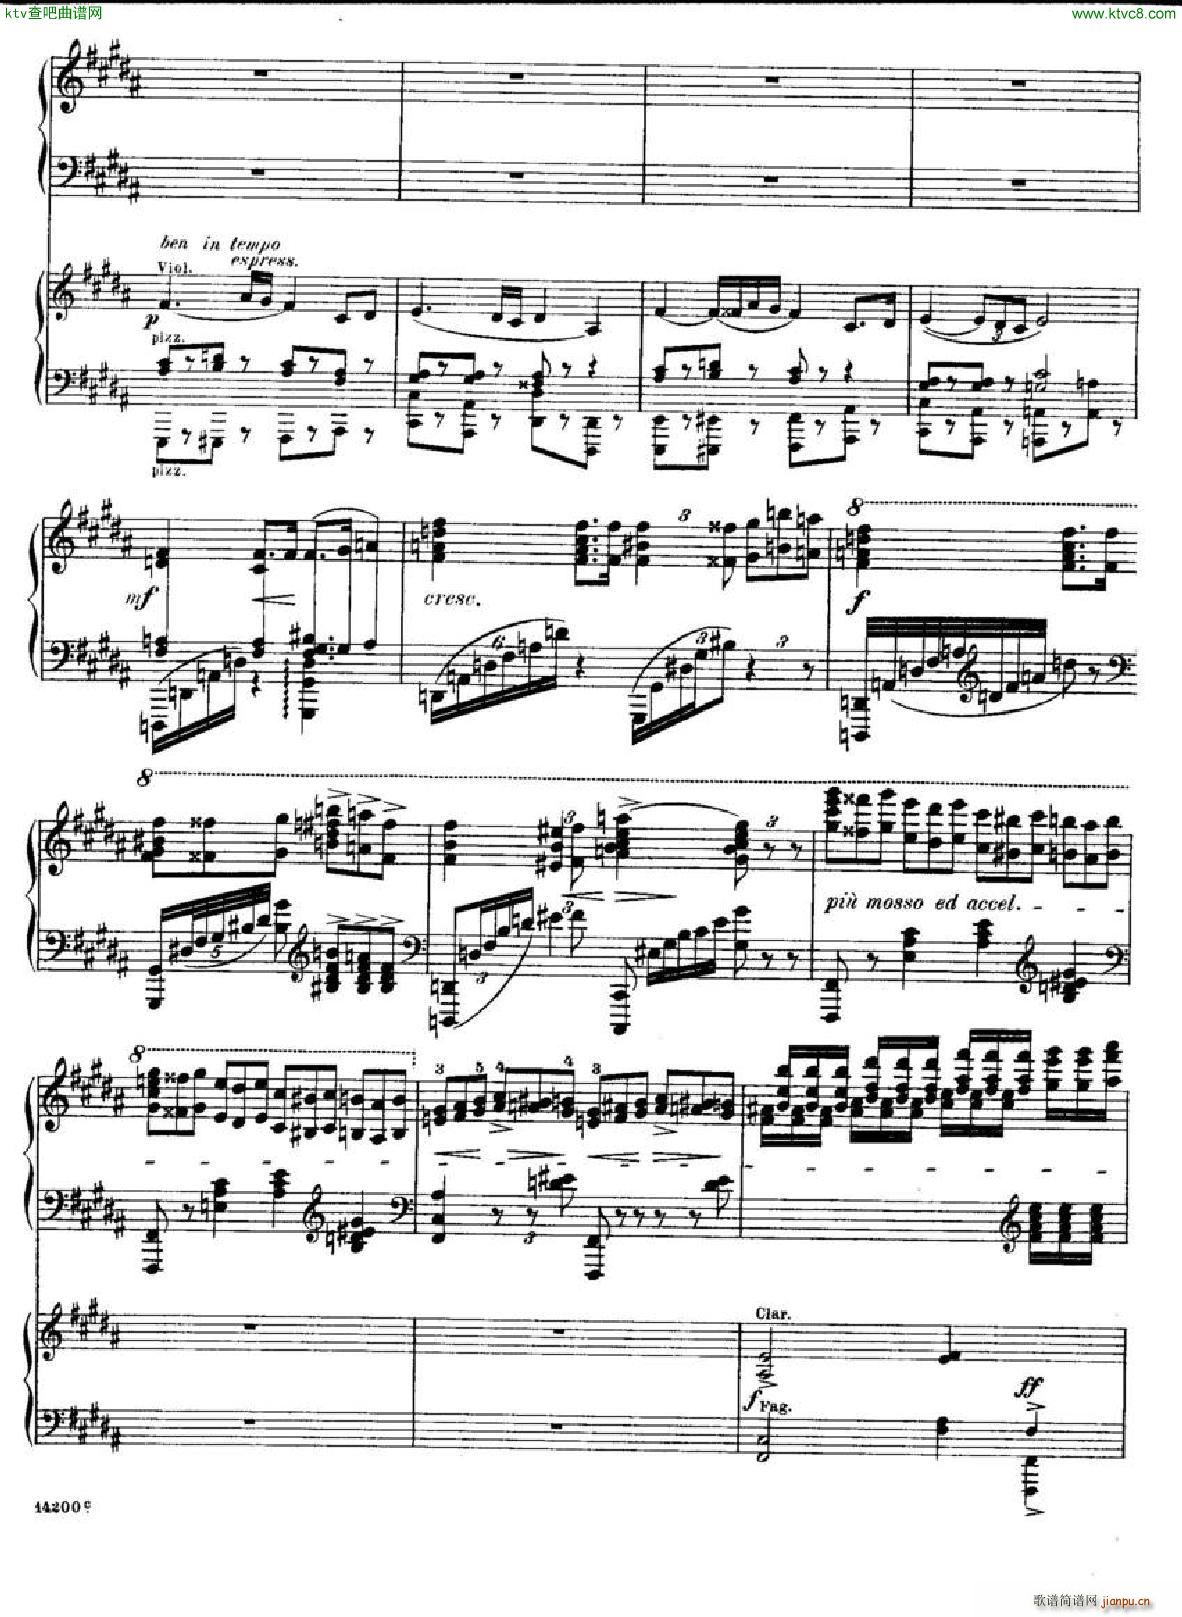 huss concerto part1 2